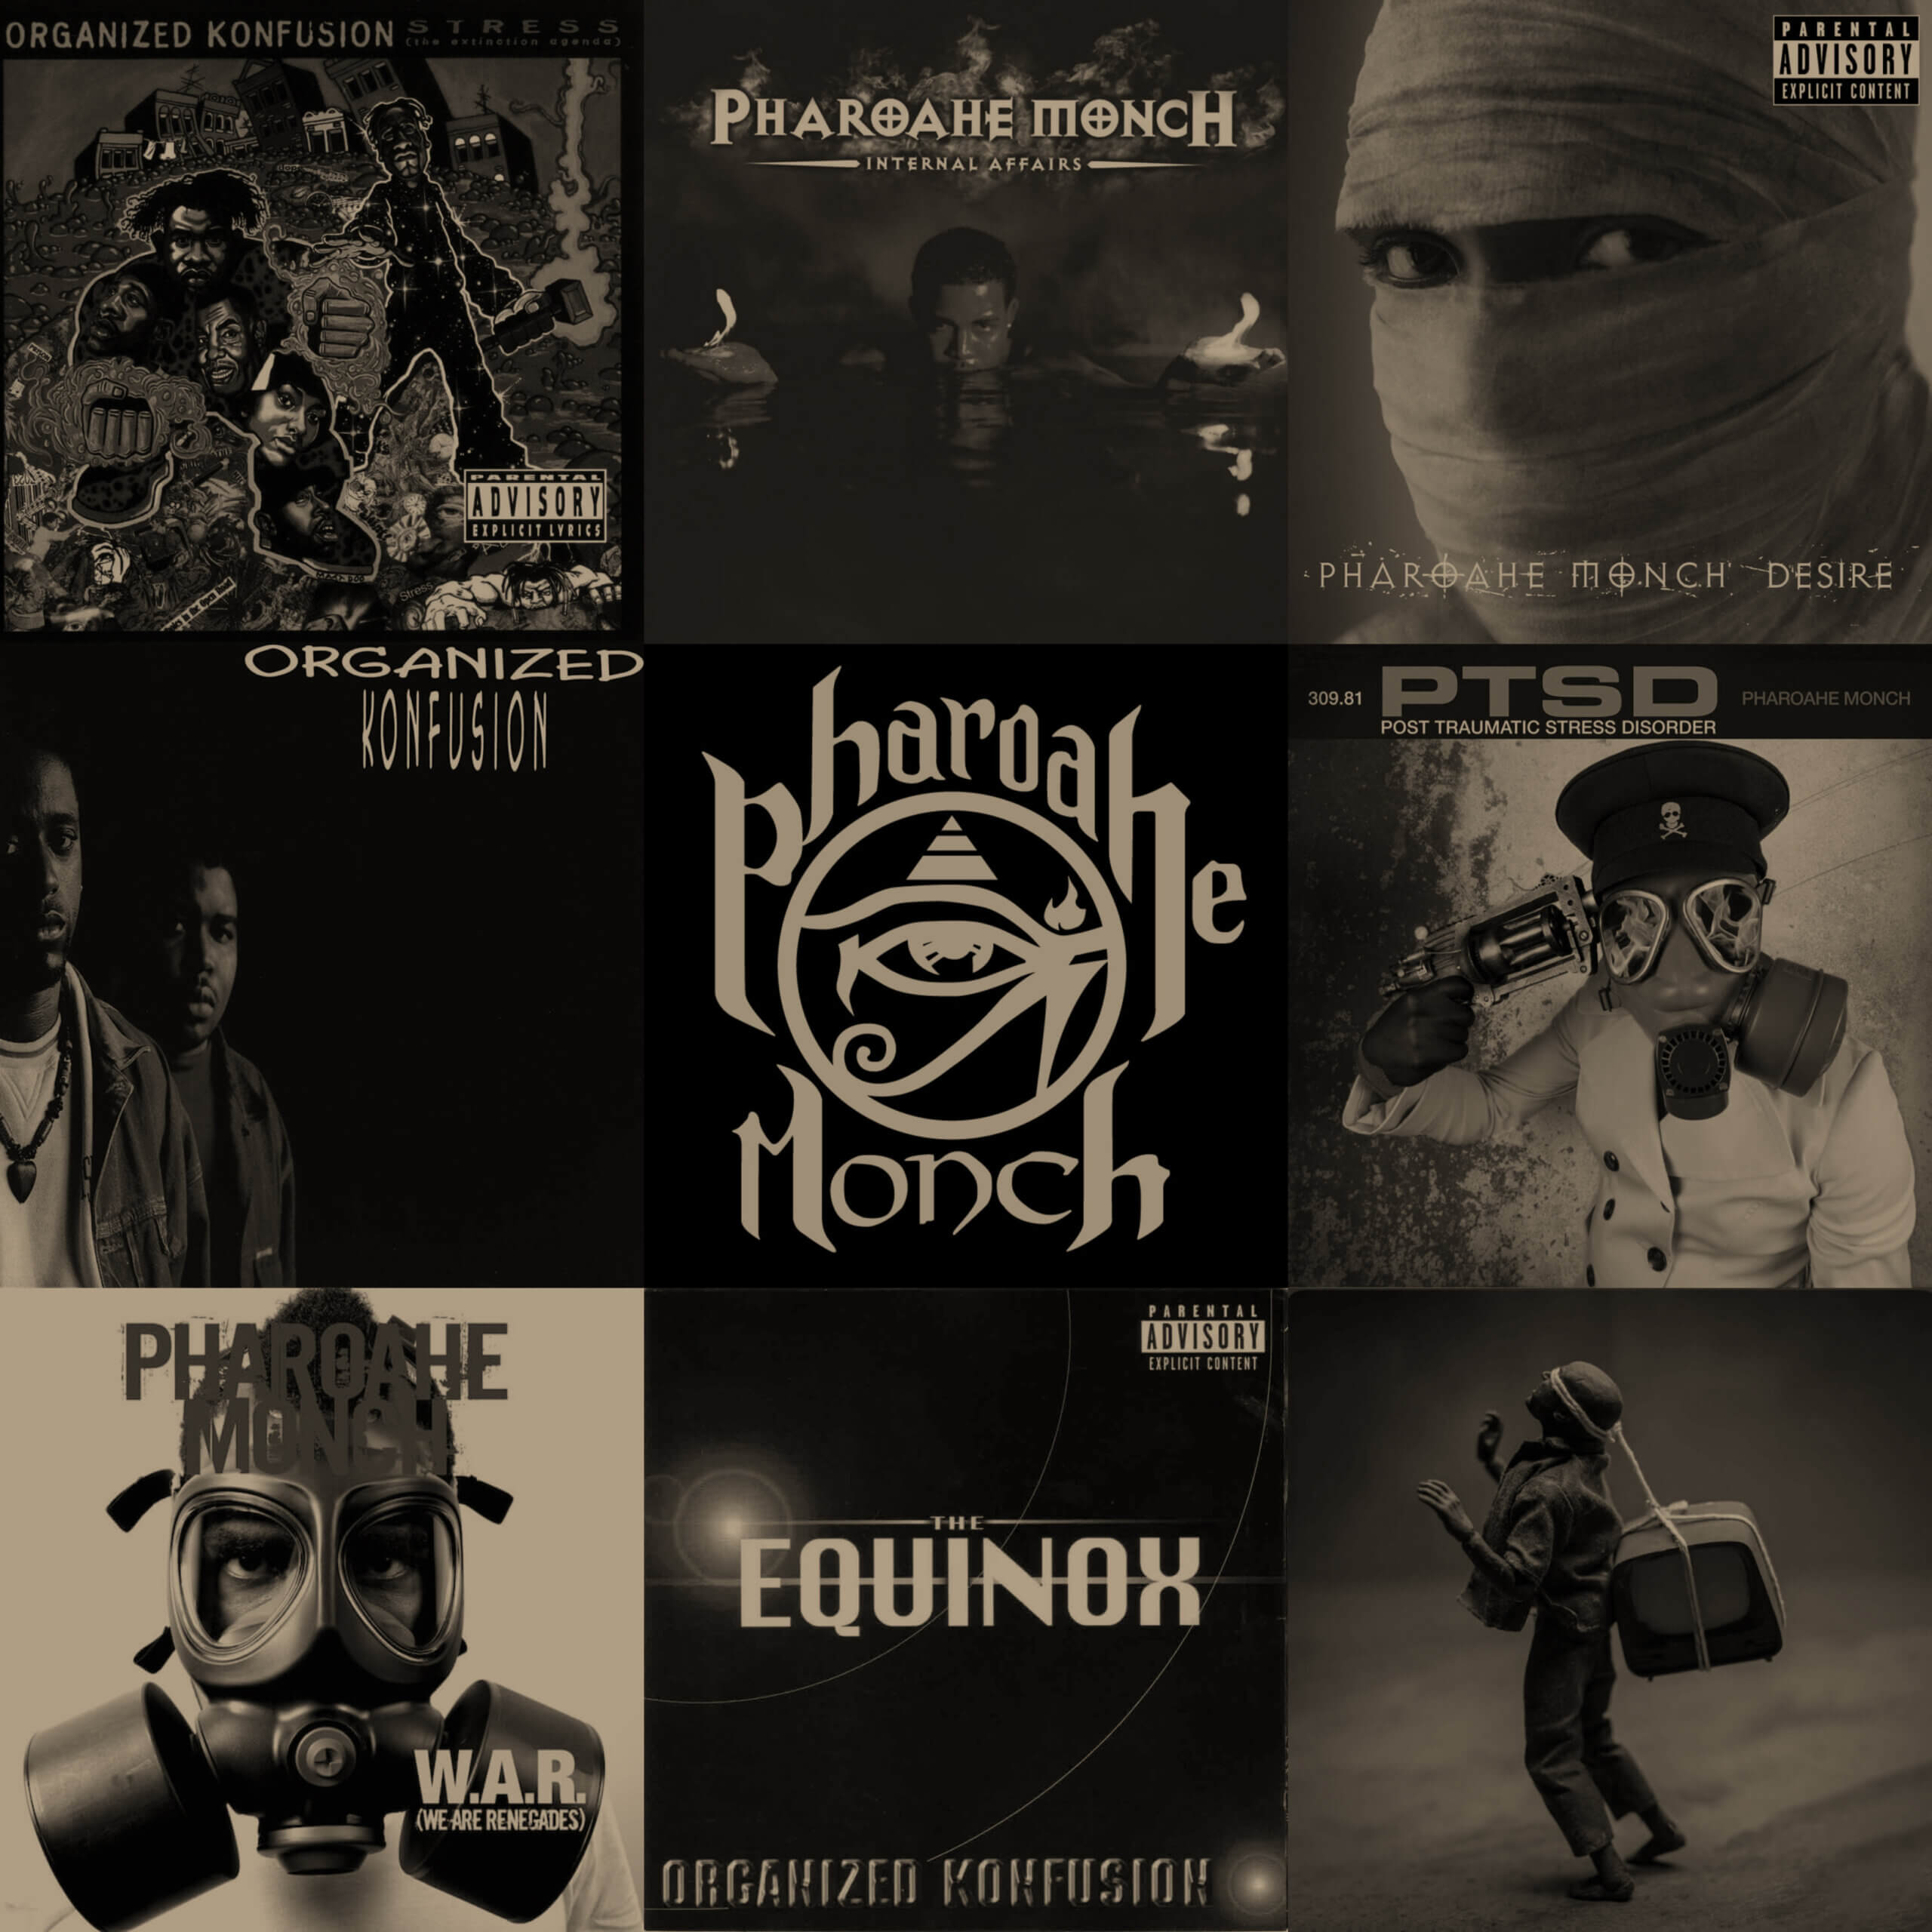 Pharoahe Monch - Simon Says/Behind Closed Doors Album Reviews, Songs & More